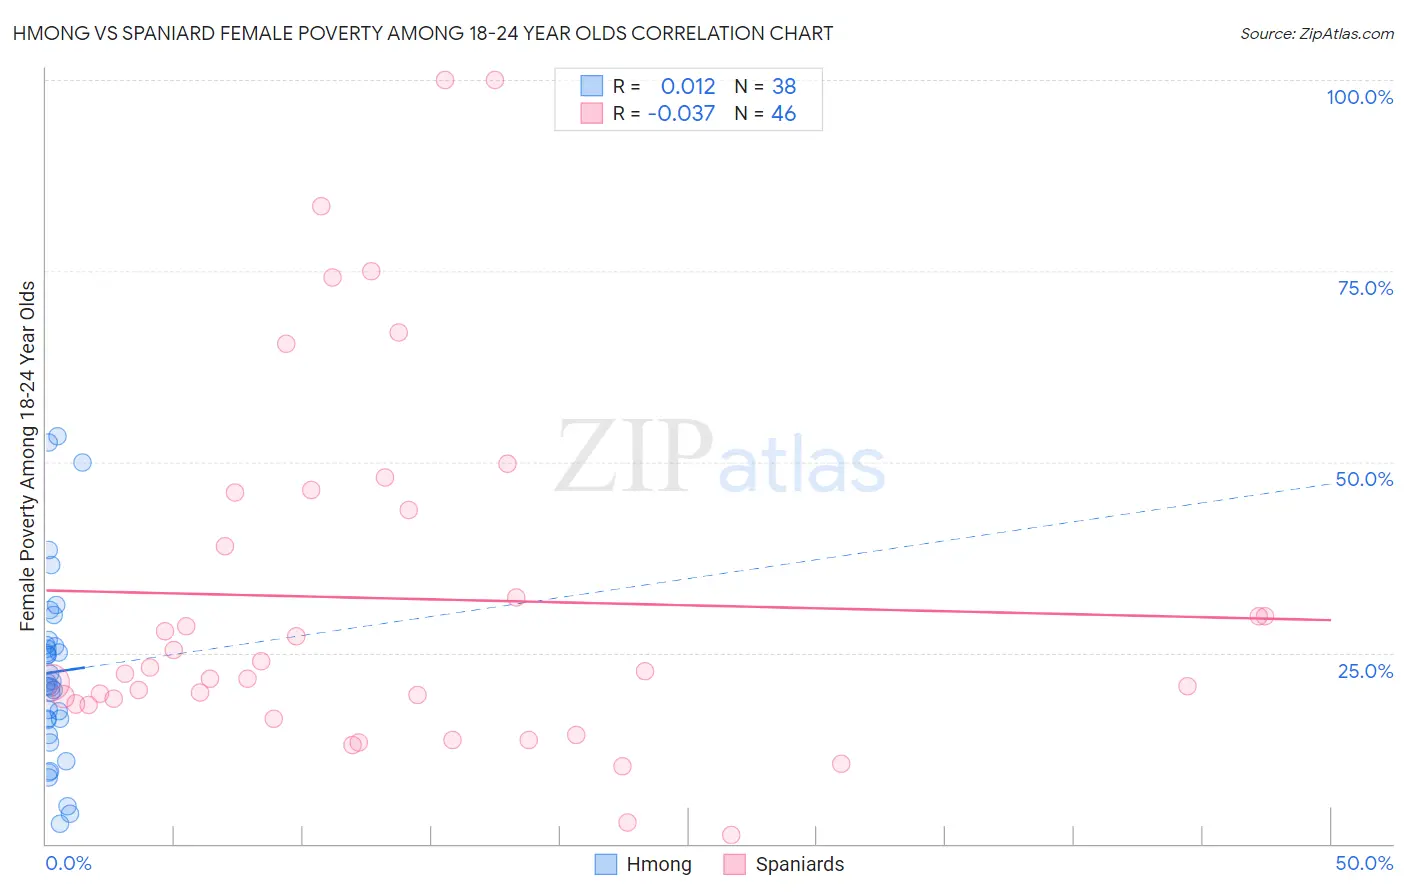 Hmong vs Spaniard Female Poverty Among 18-24 Year Olds